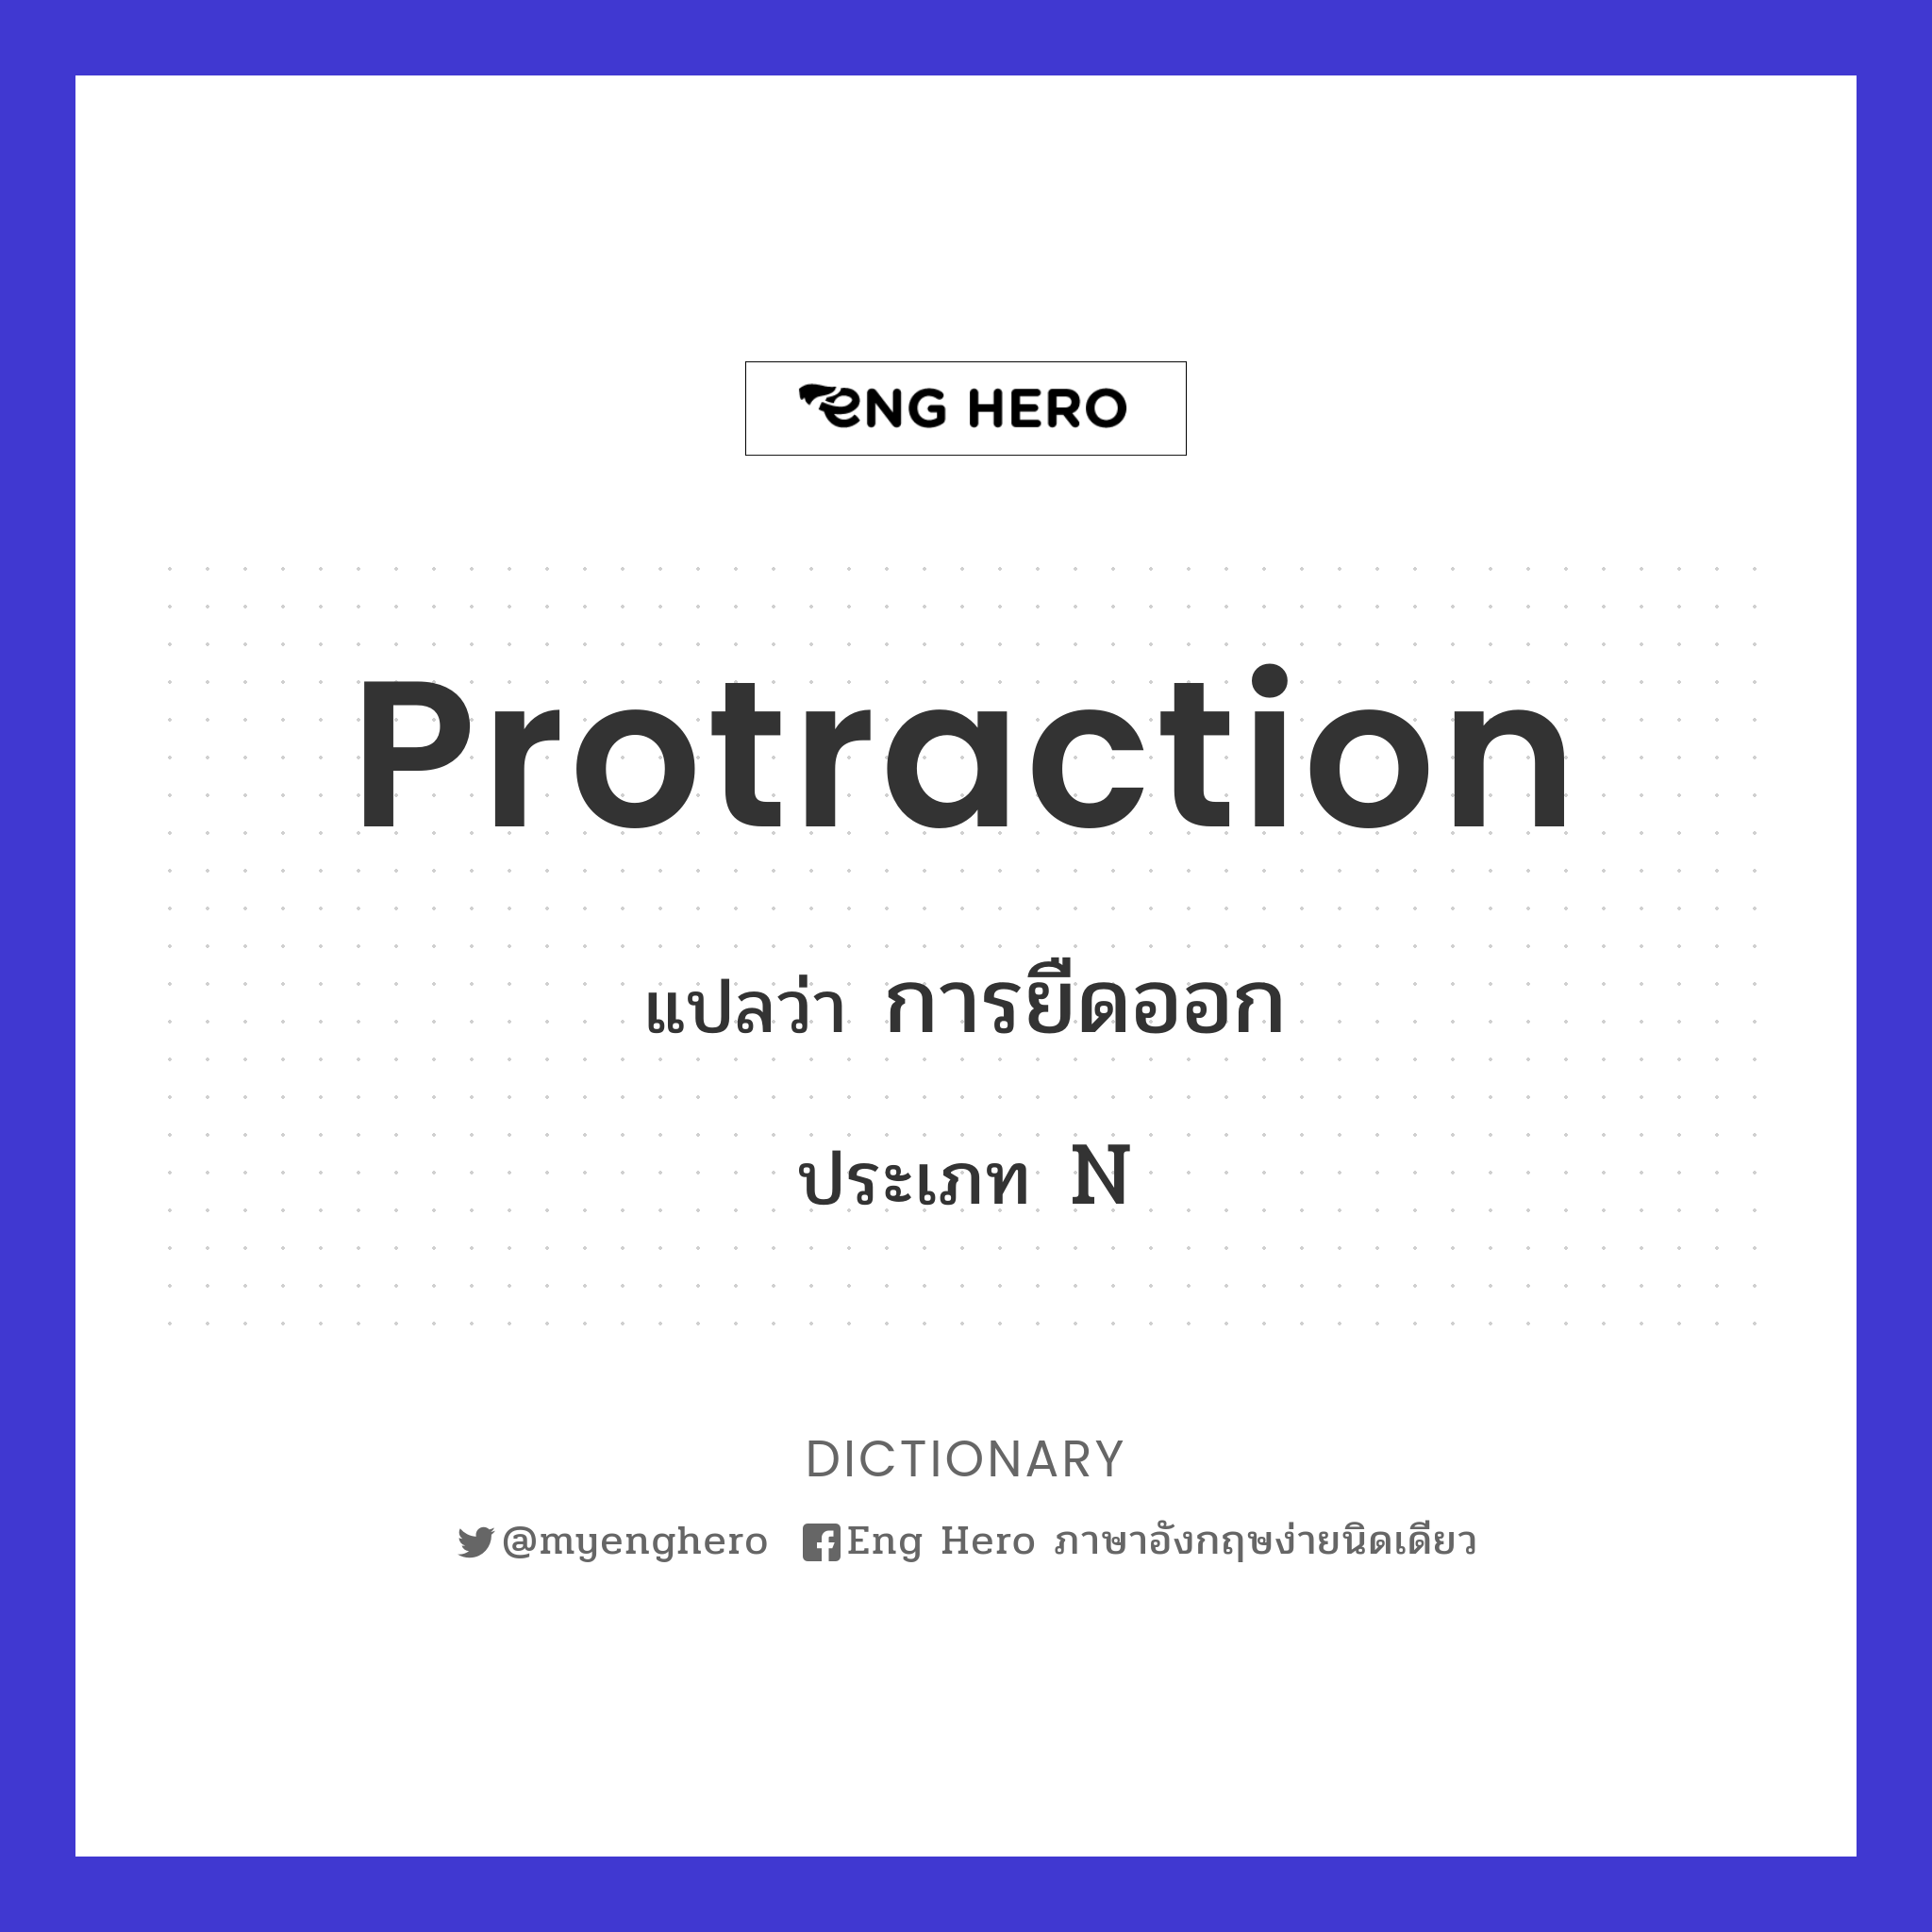 protraction